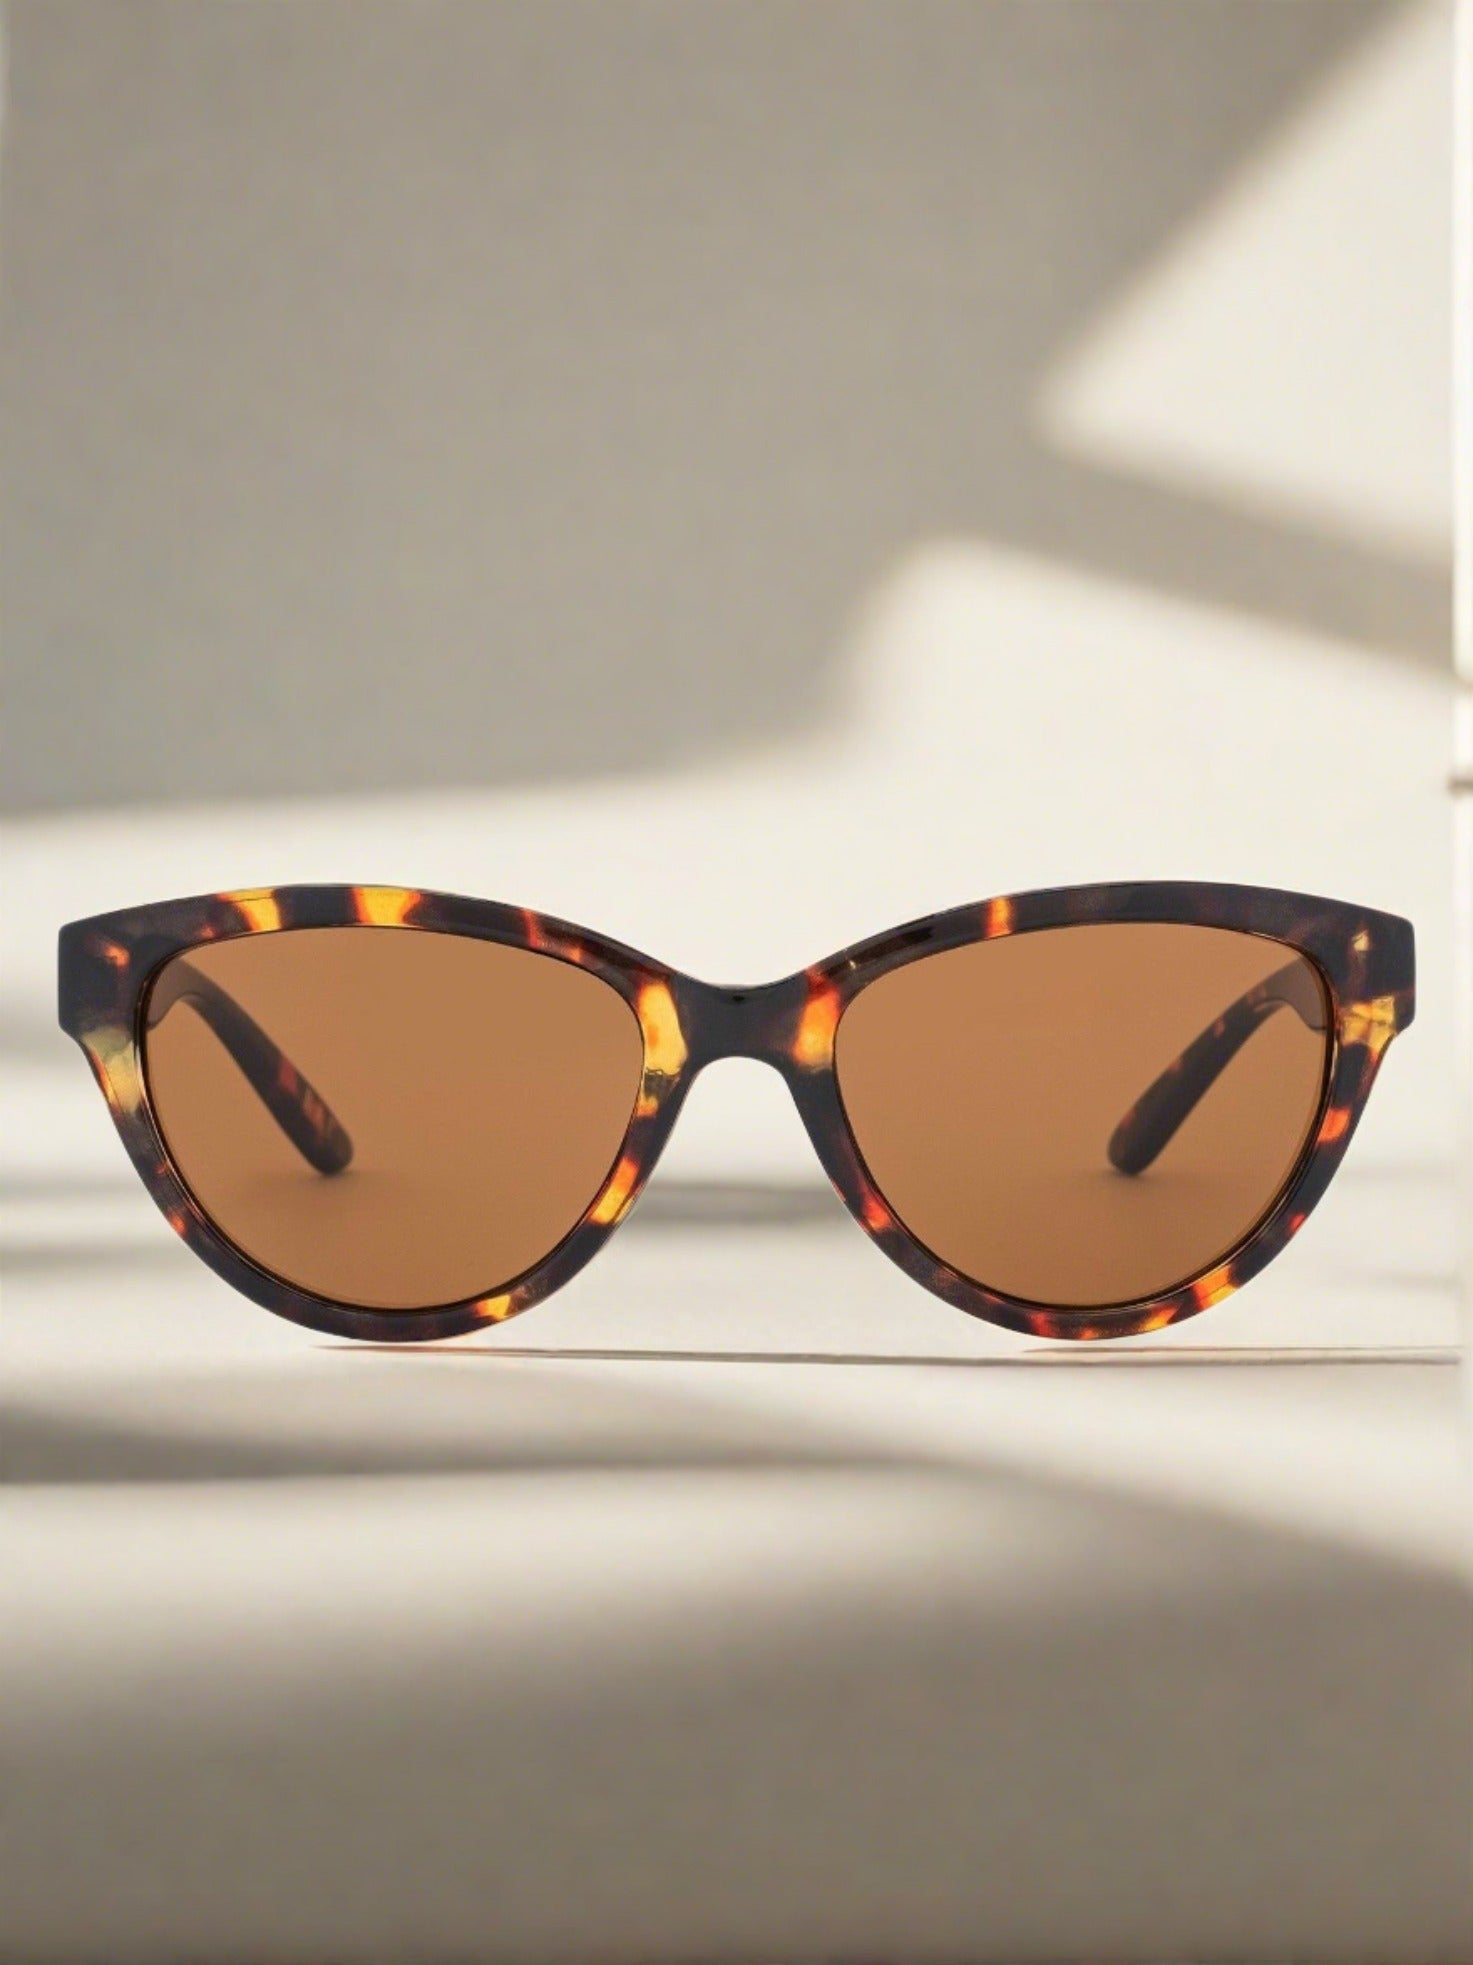 CHLOE Premium Sunglasses with "HELLO SUNSHINE" Signature Font - Rae Dunn Wear - Sunglasses